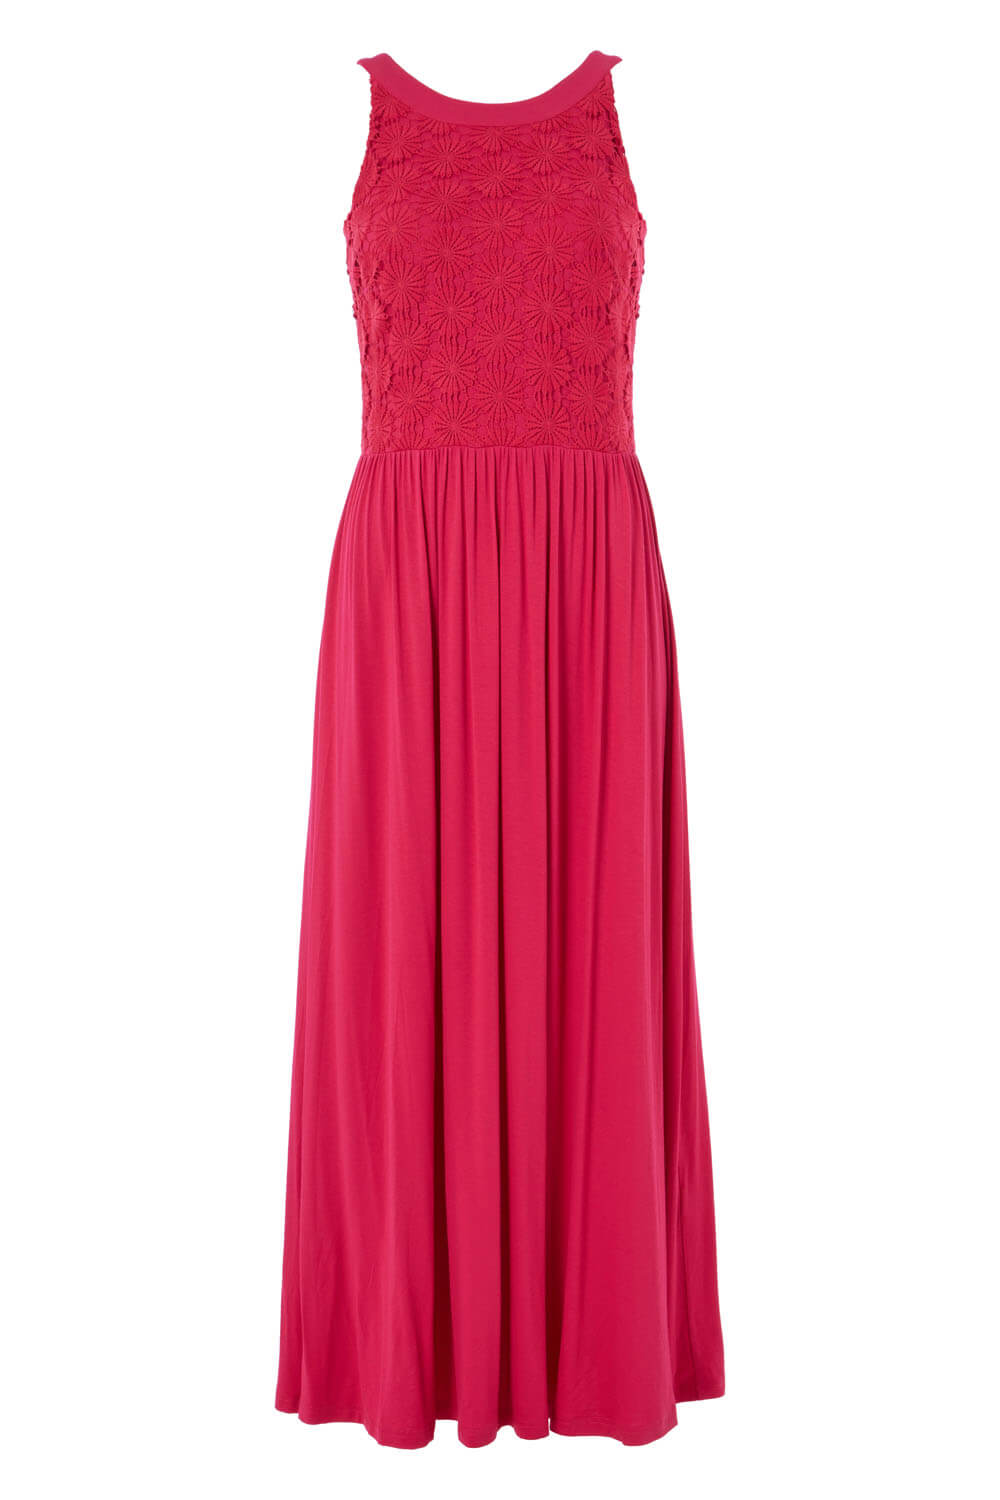 PINK Lace Bodice Jersey Maxi Dress, Image 4 of 4